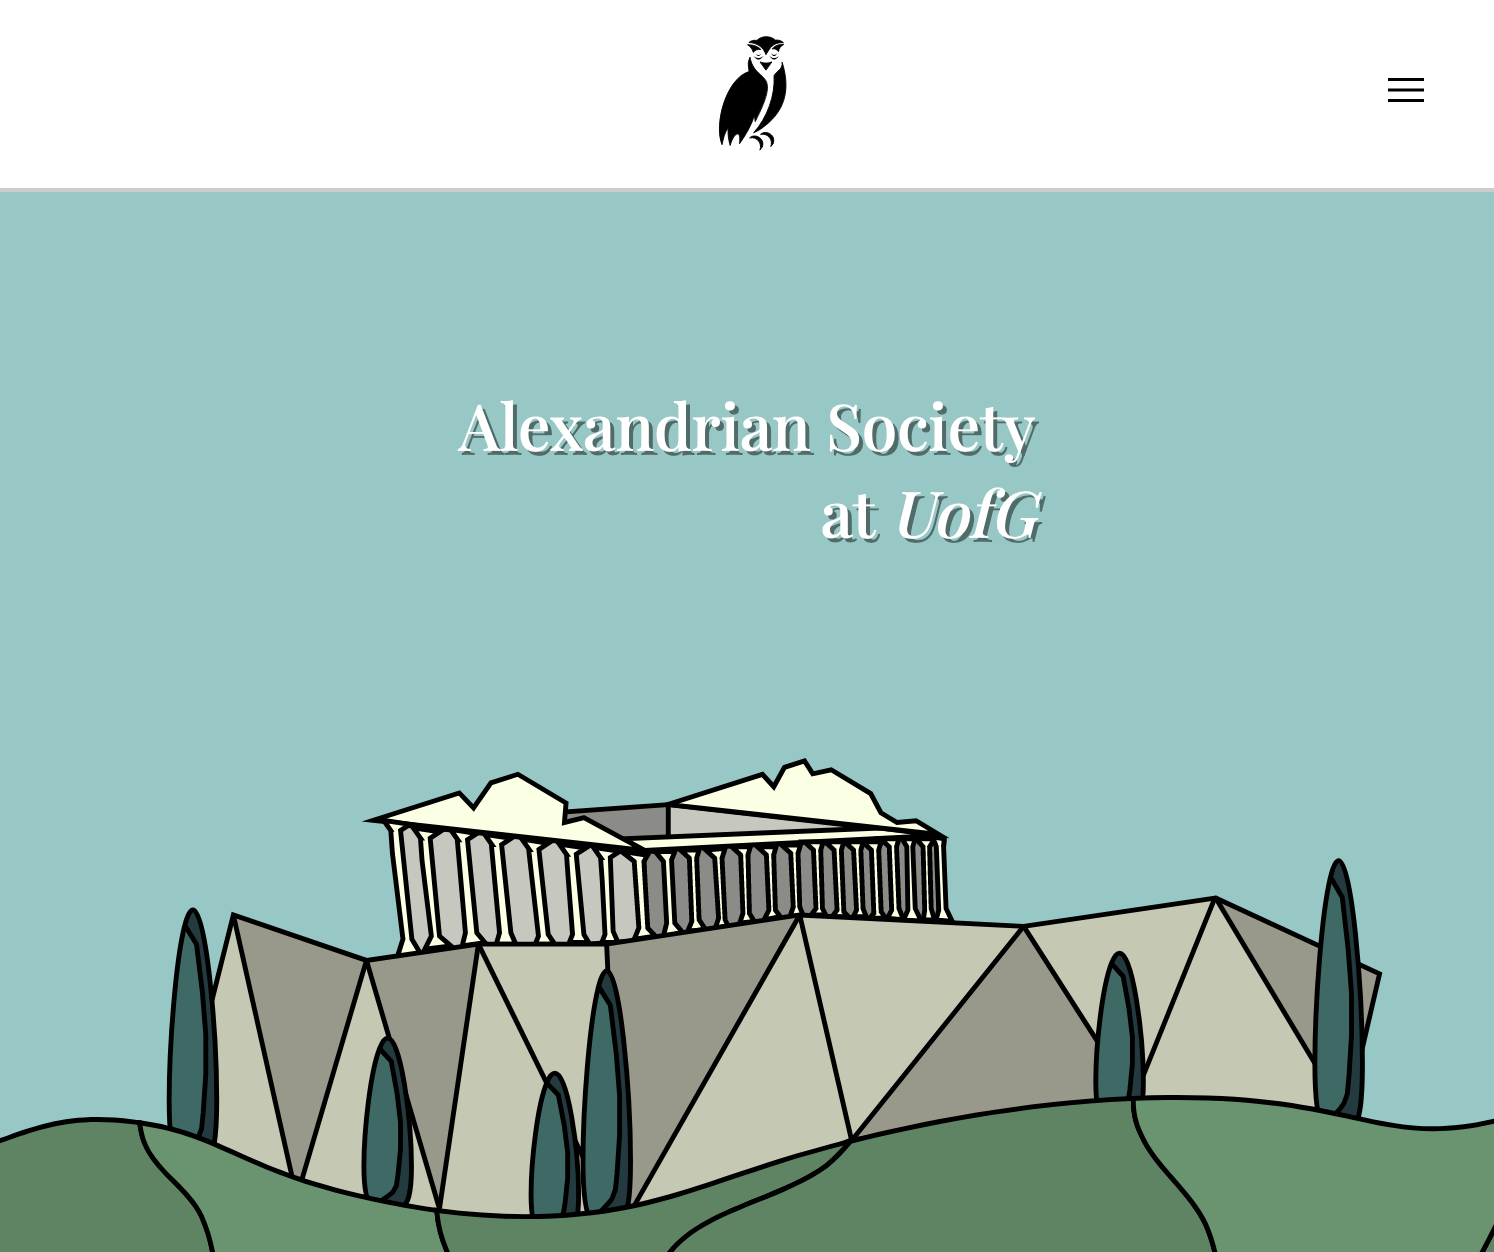 Image of the Glasgow University Alexandrian Society Site.